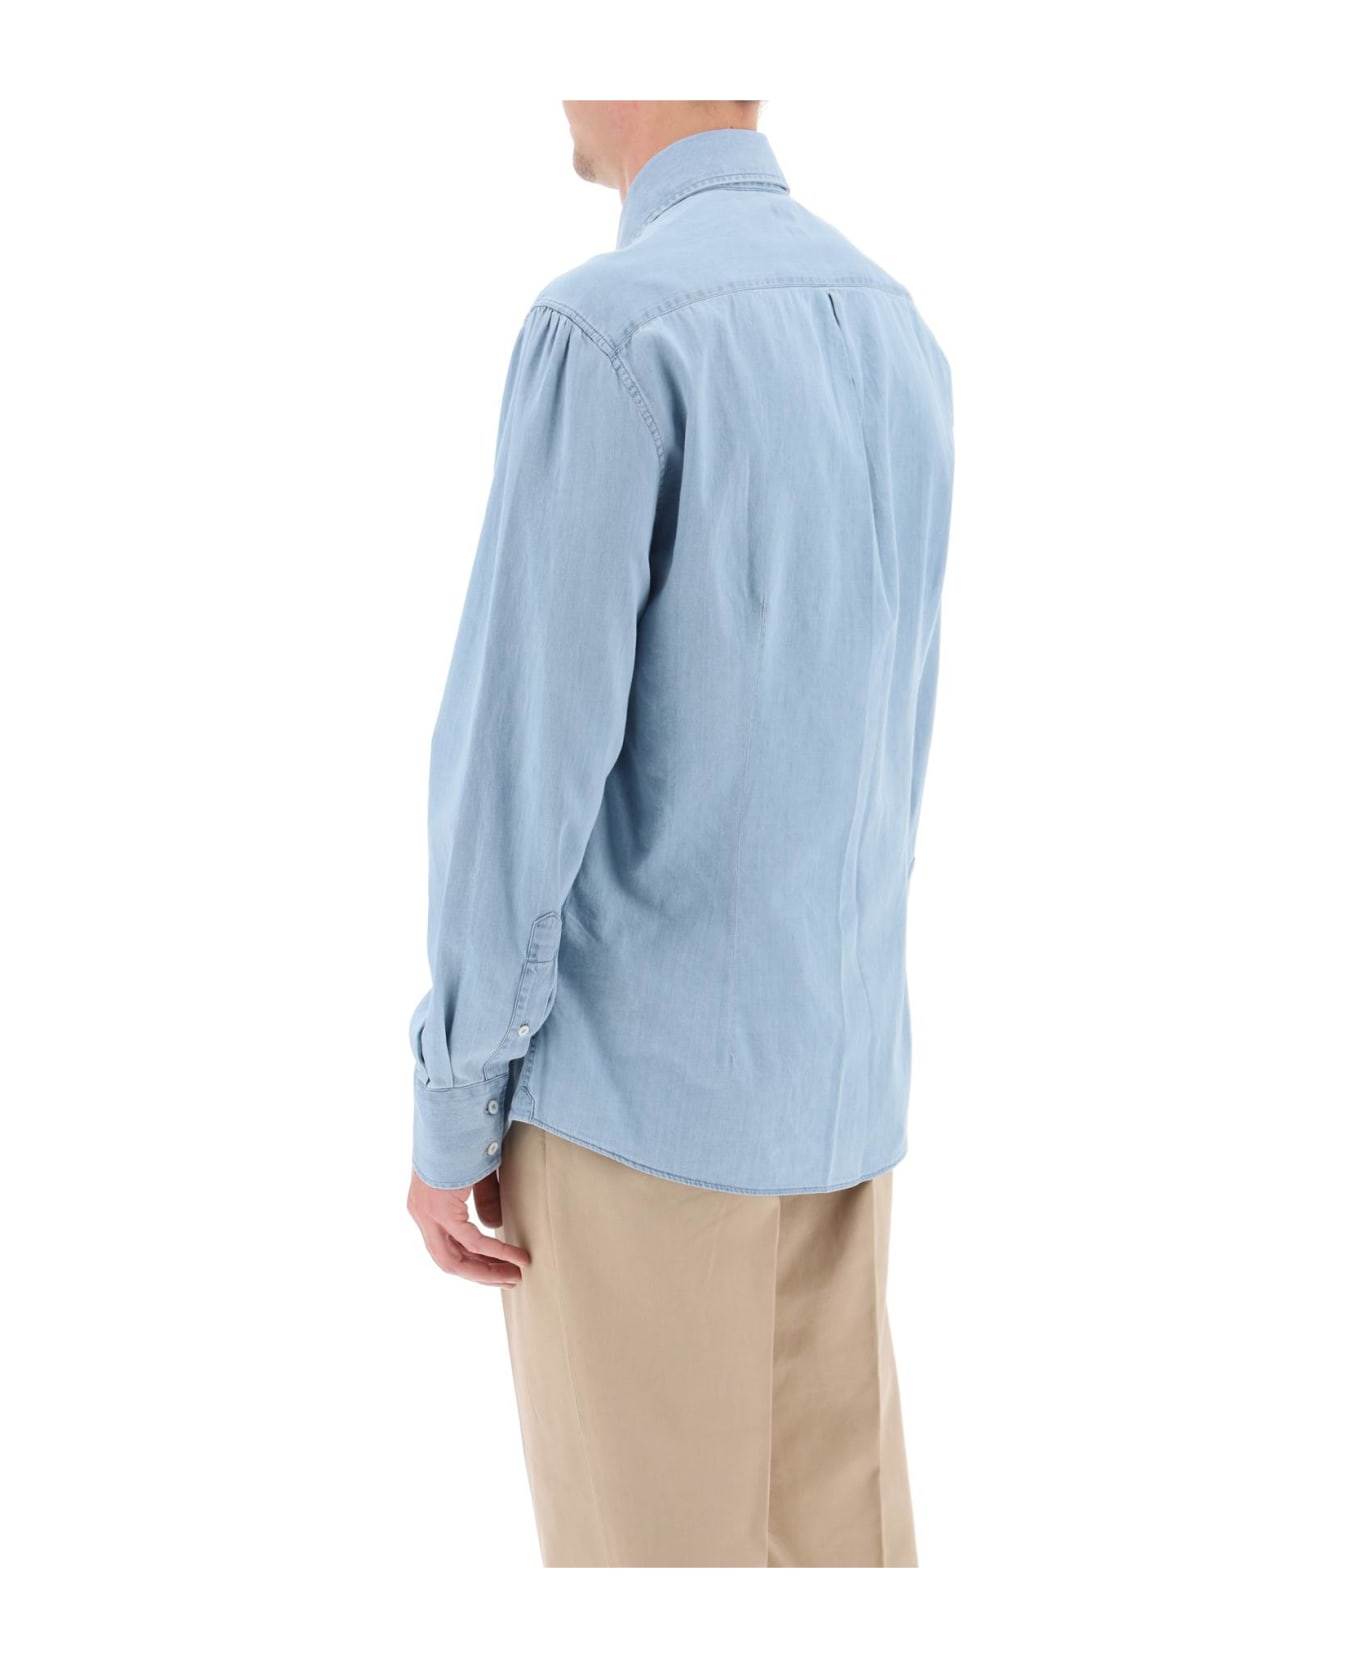 Brunello Cucinelli Chambray Shirt - DENIM CHIARISSIMO (Light blue)